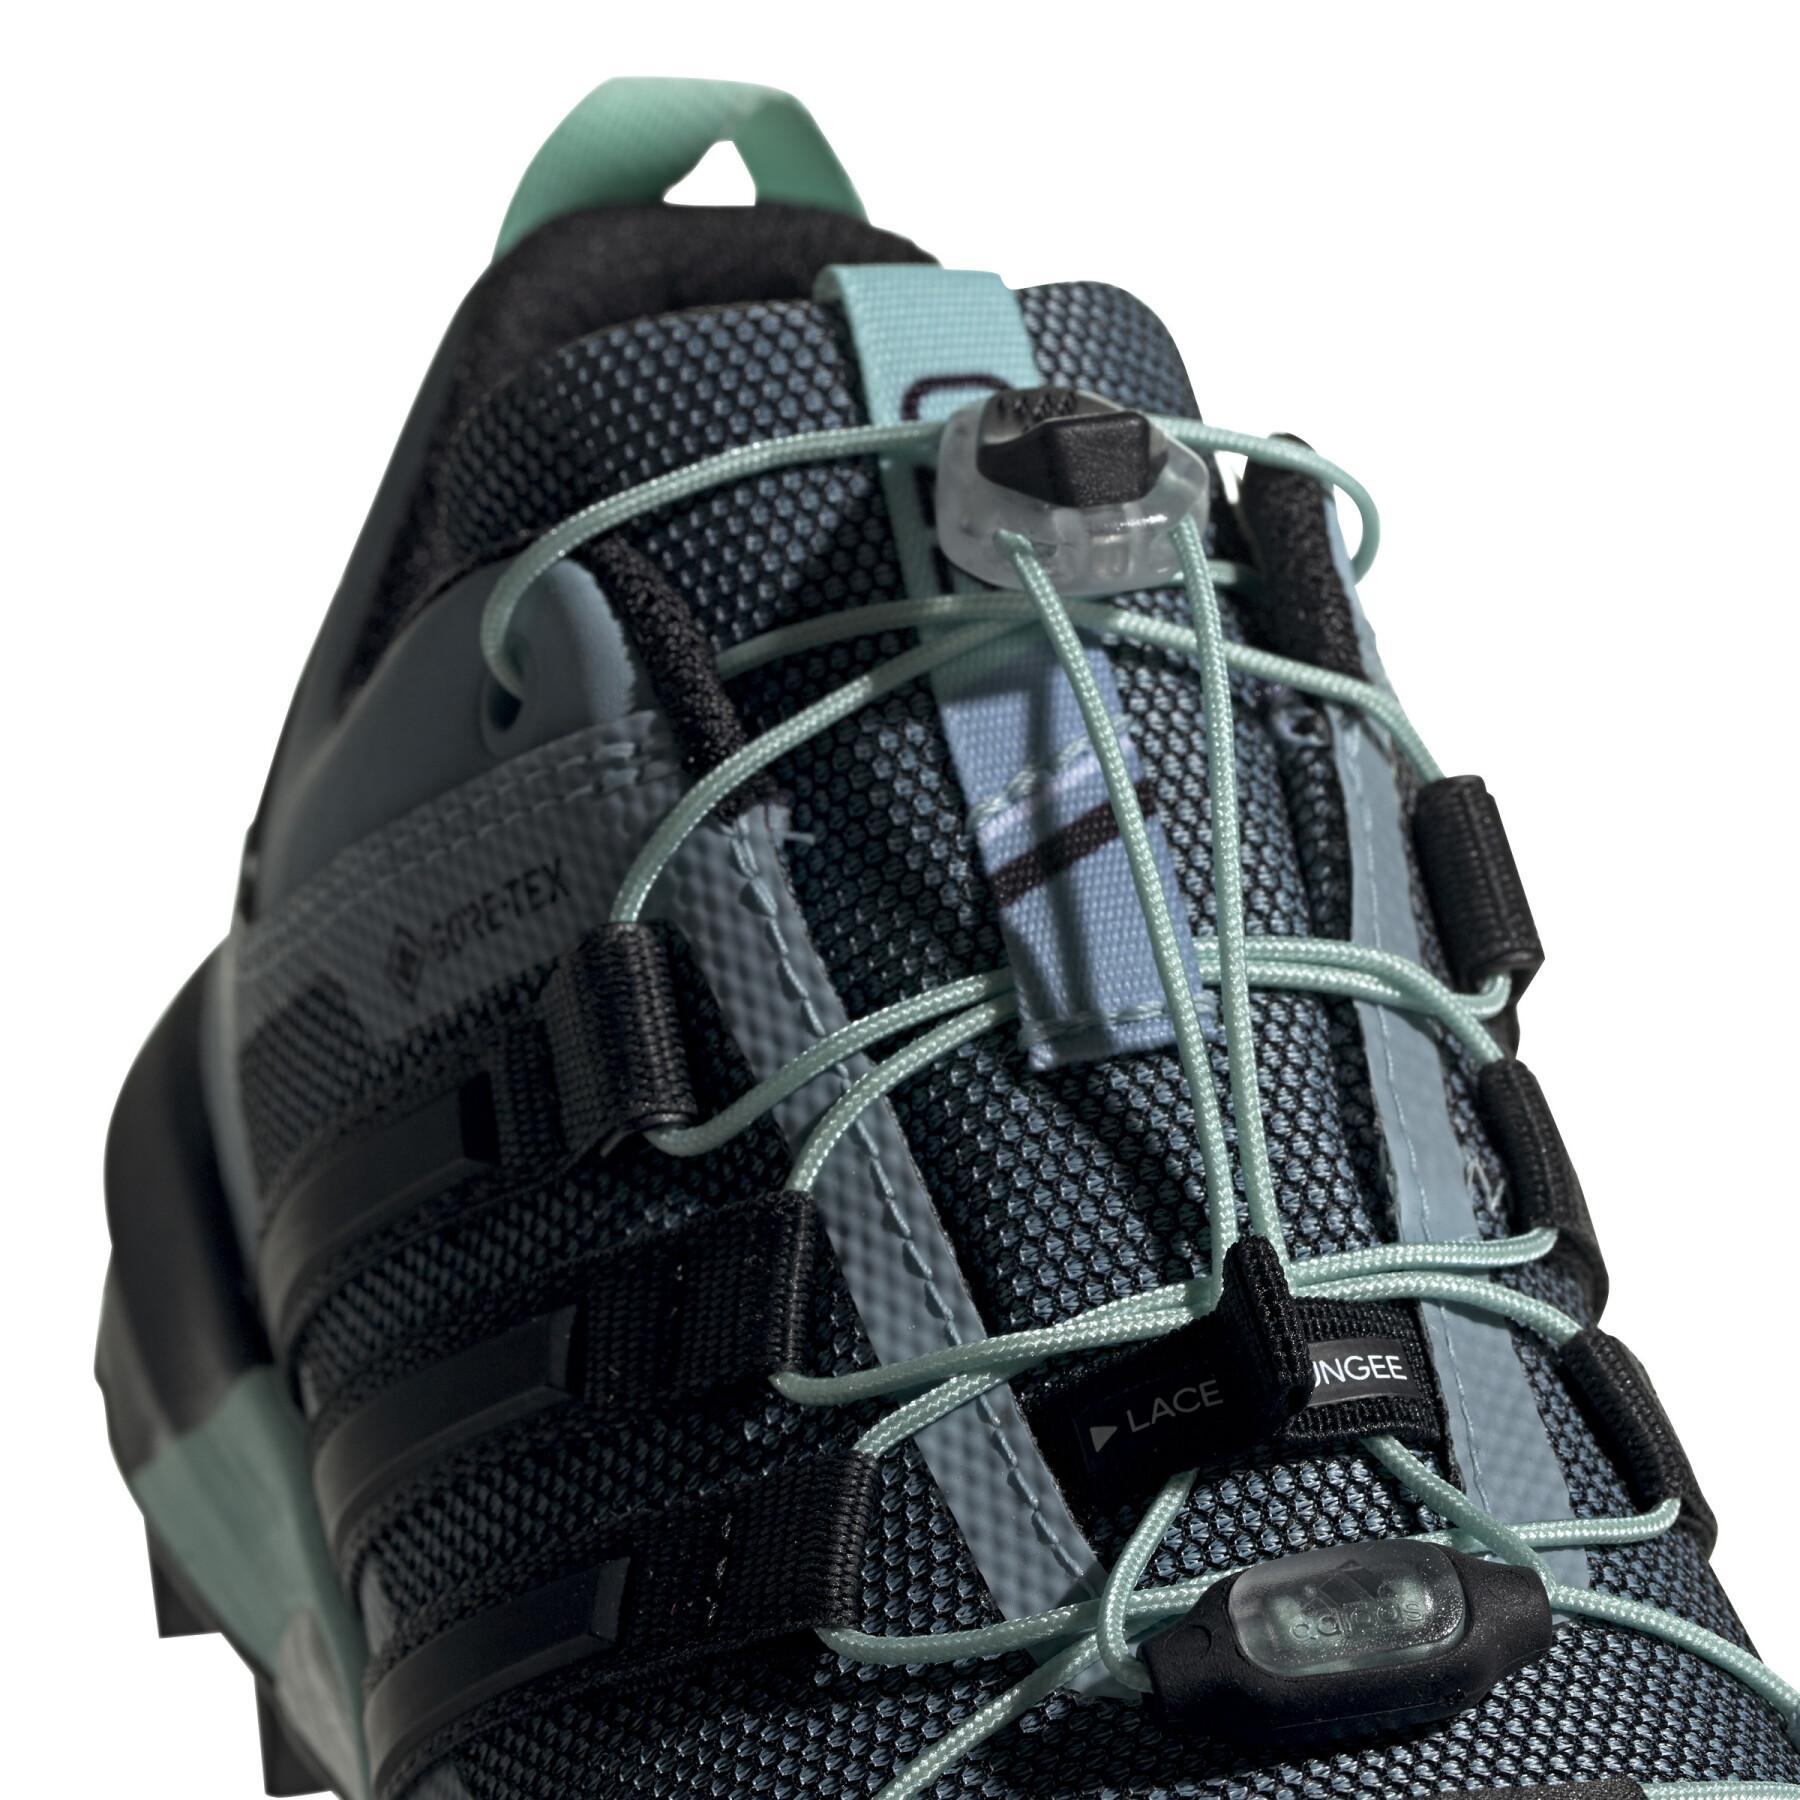 Women's trail shoes adidas Terrex Skychaser GTX